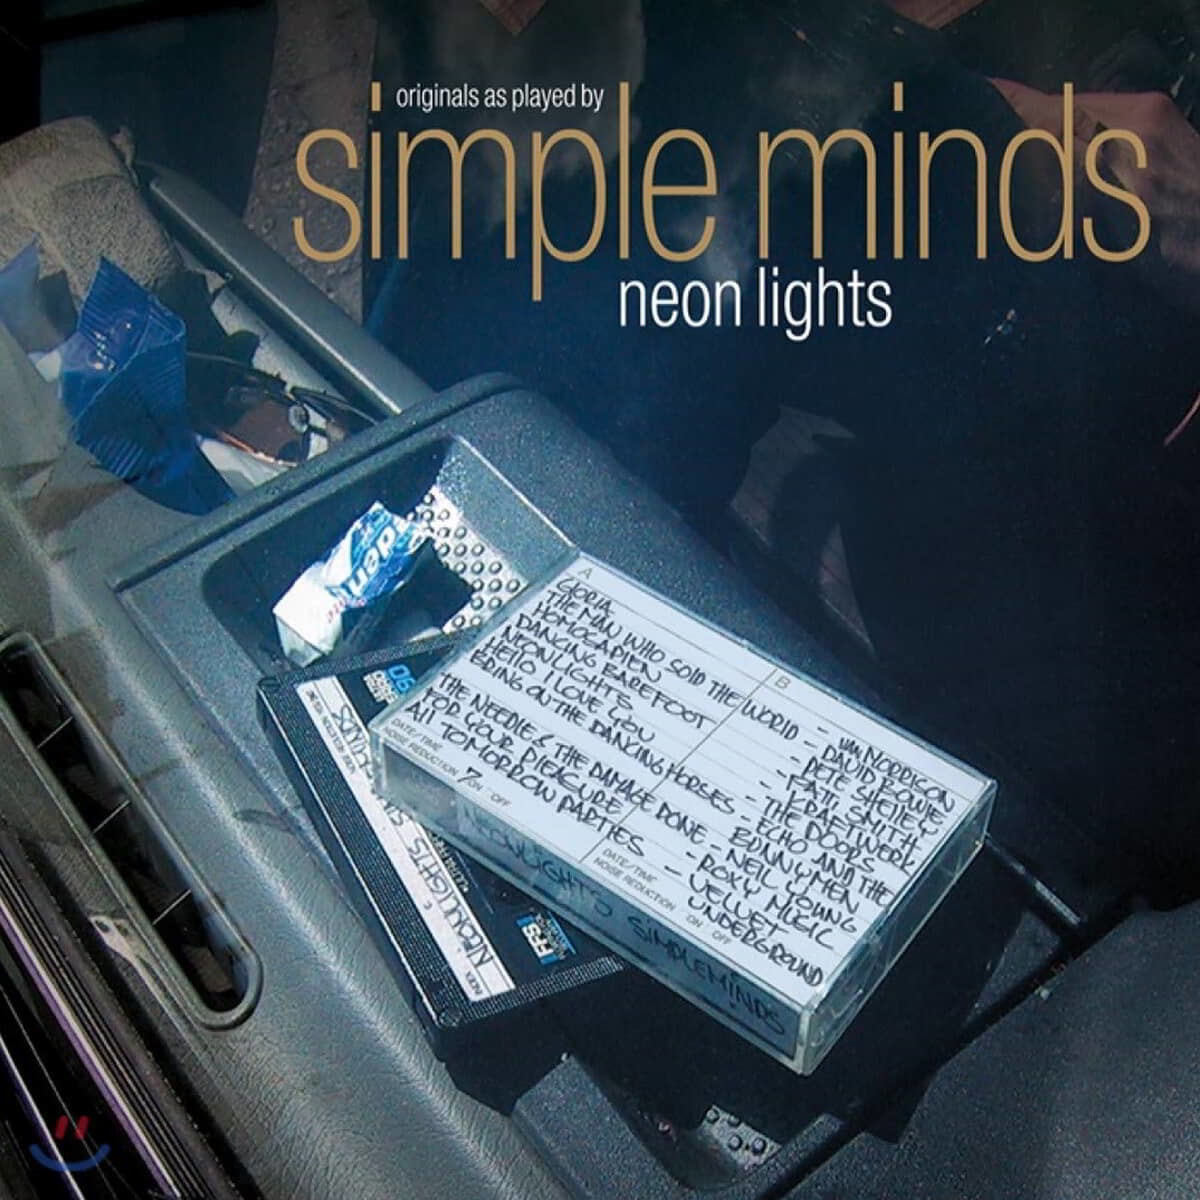 Simple Minds (심플 마인즈) - Neon Lights